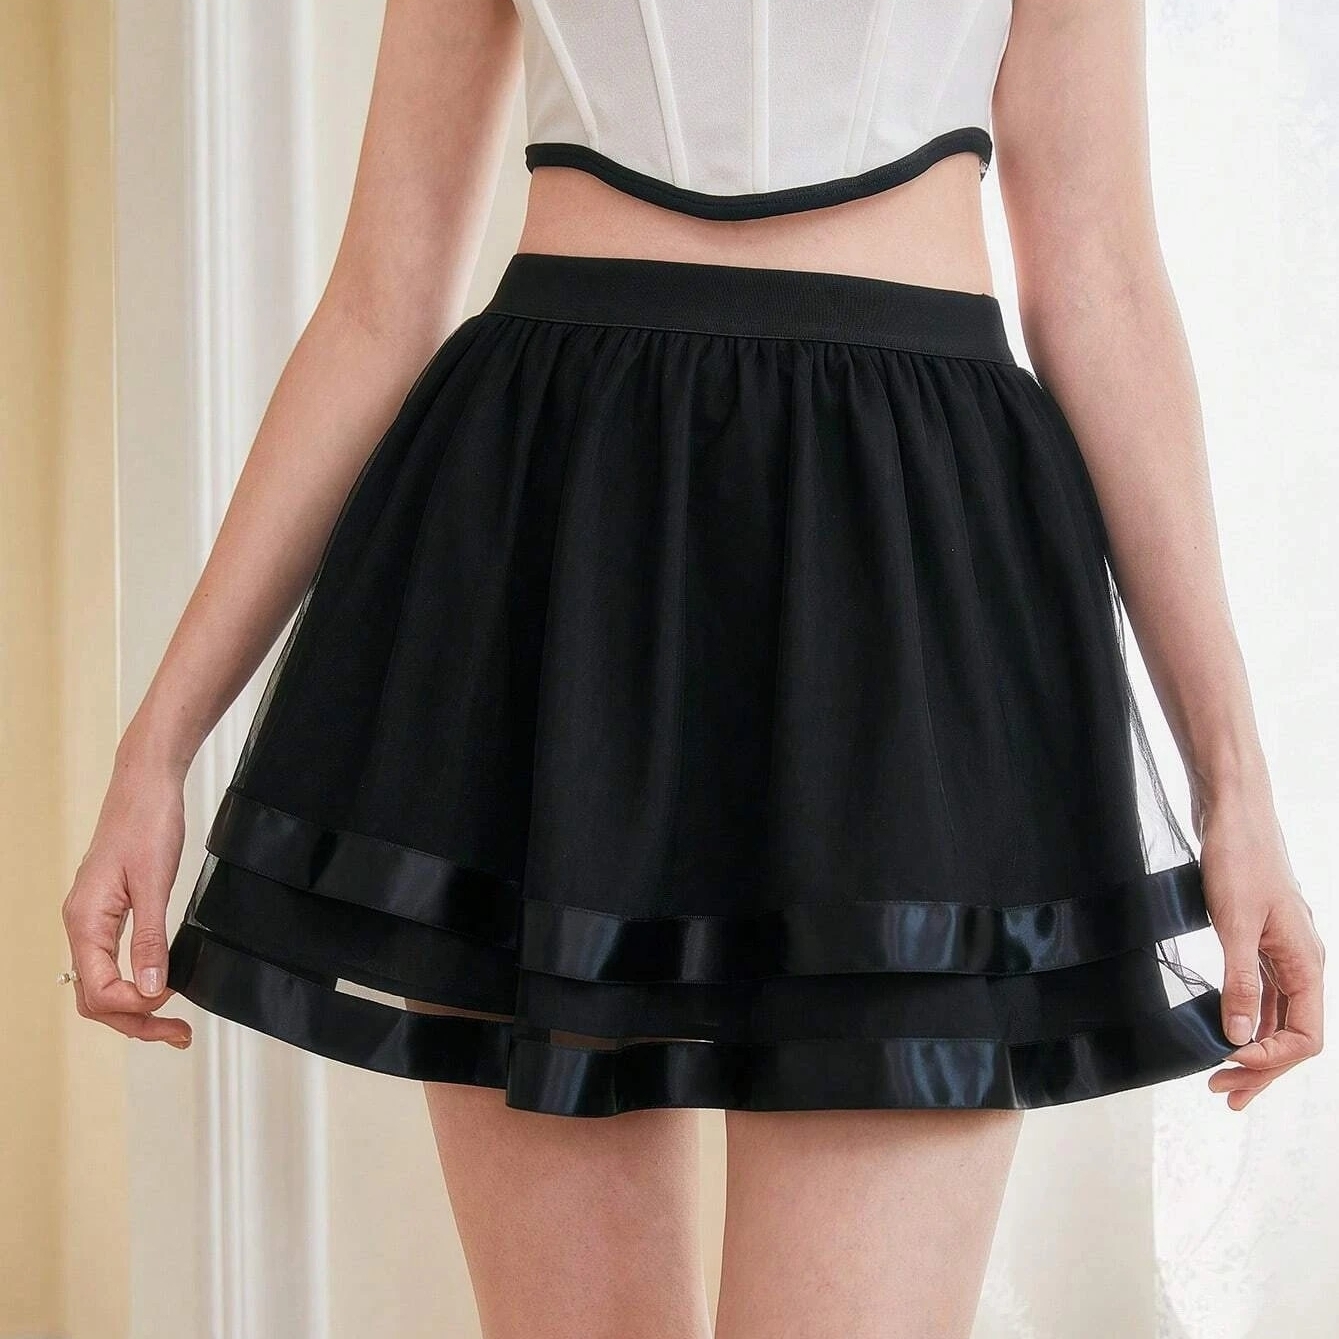 Solid Mesh Overlay Skirt - Small